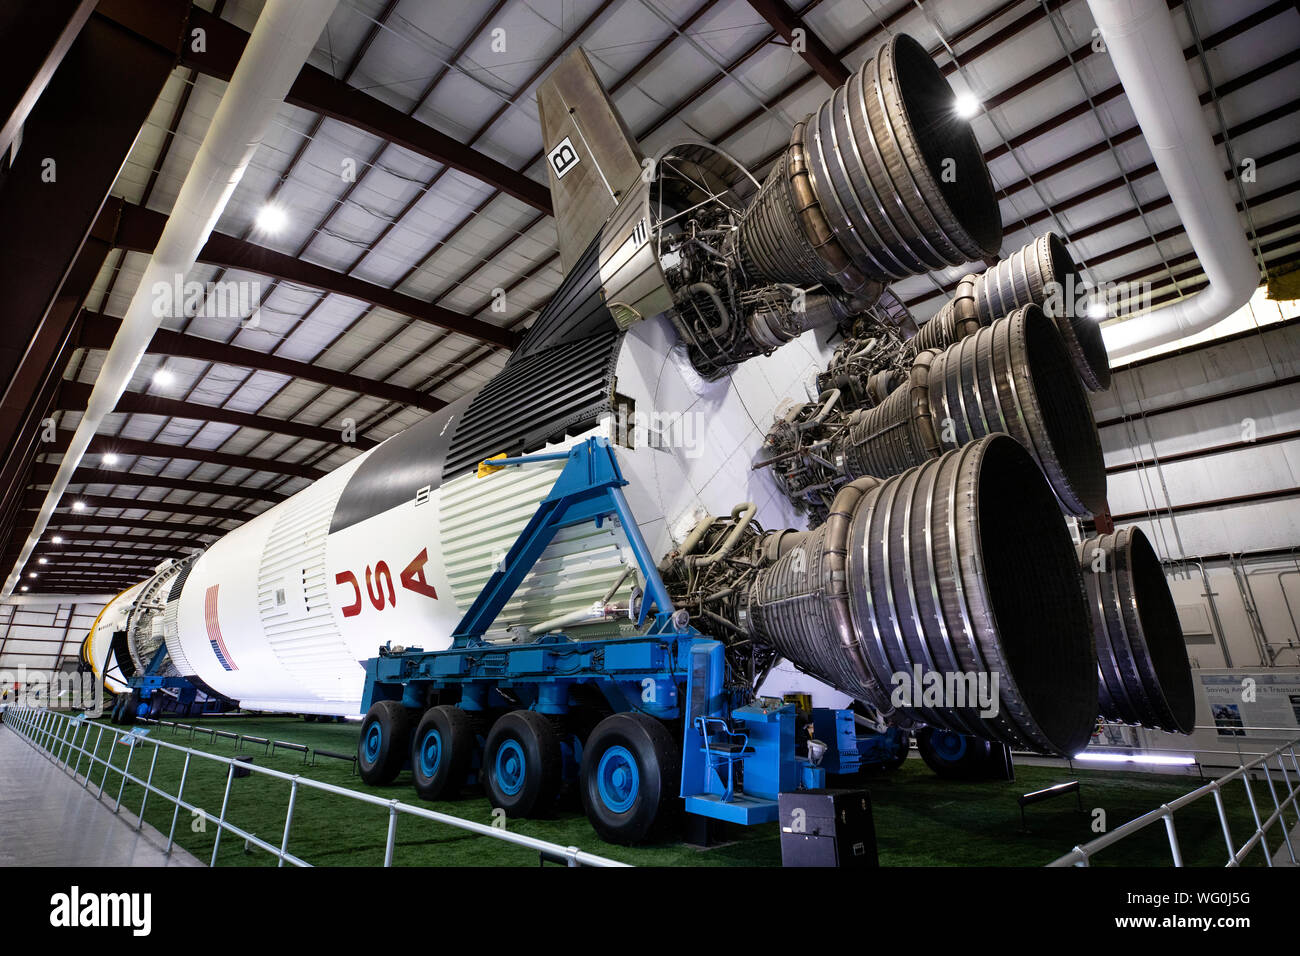 Saturn V rocket presso la NASA Johnson Space Center Houston, Texas Foto Stock